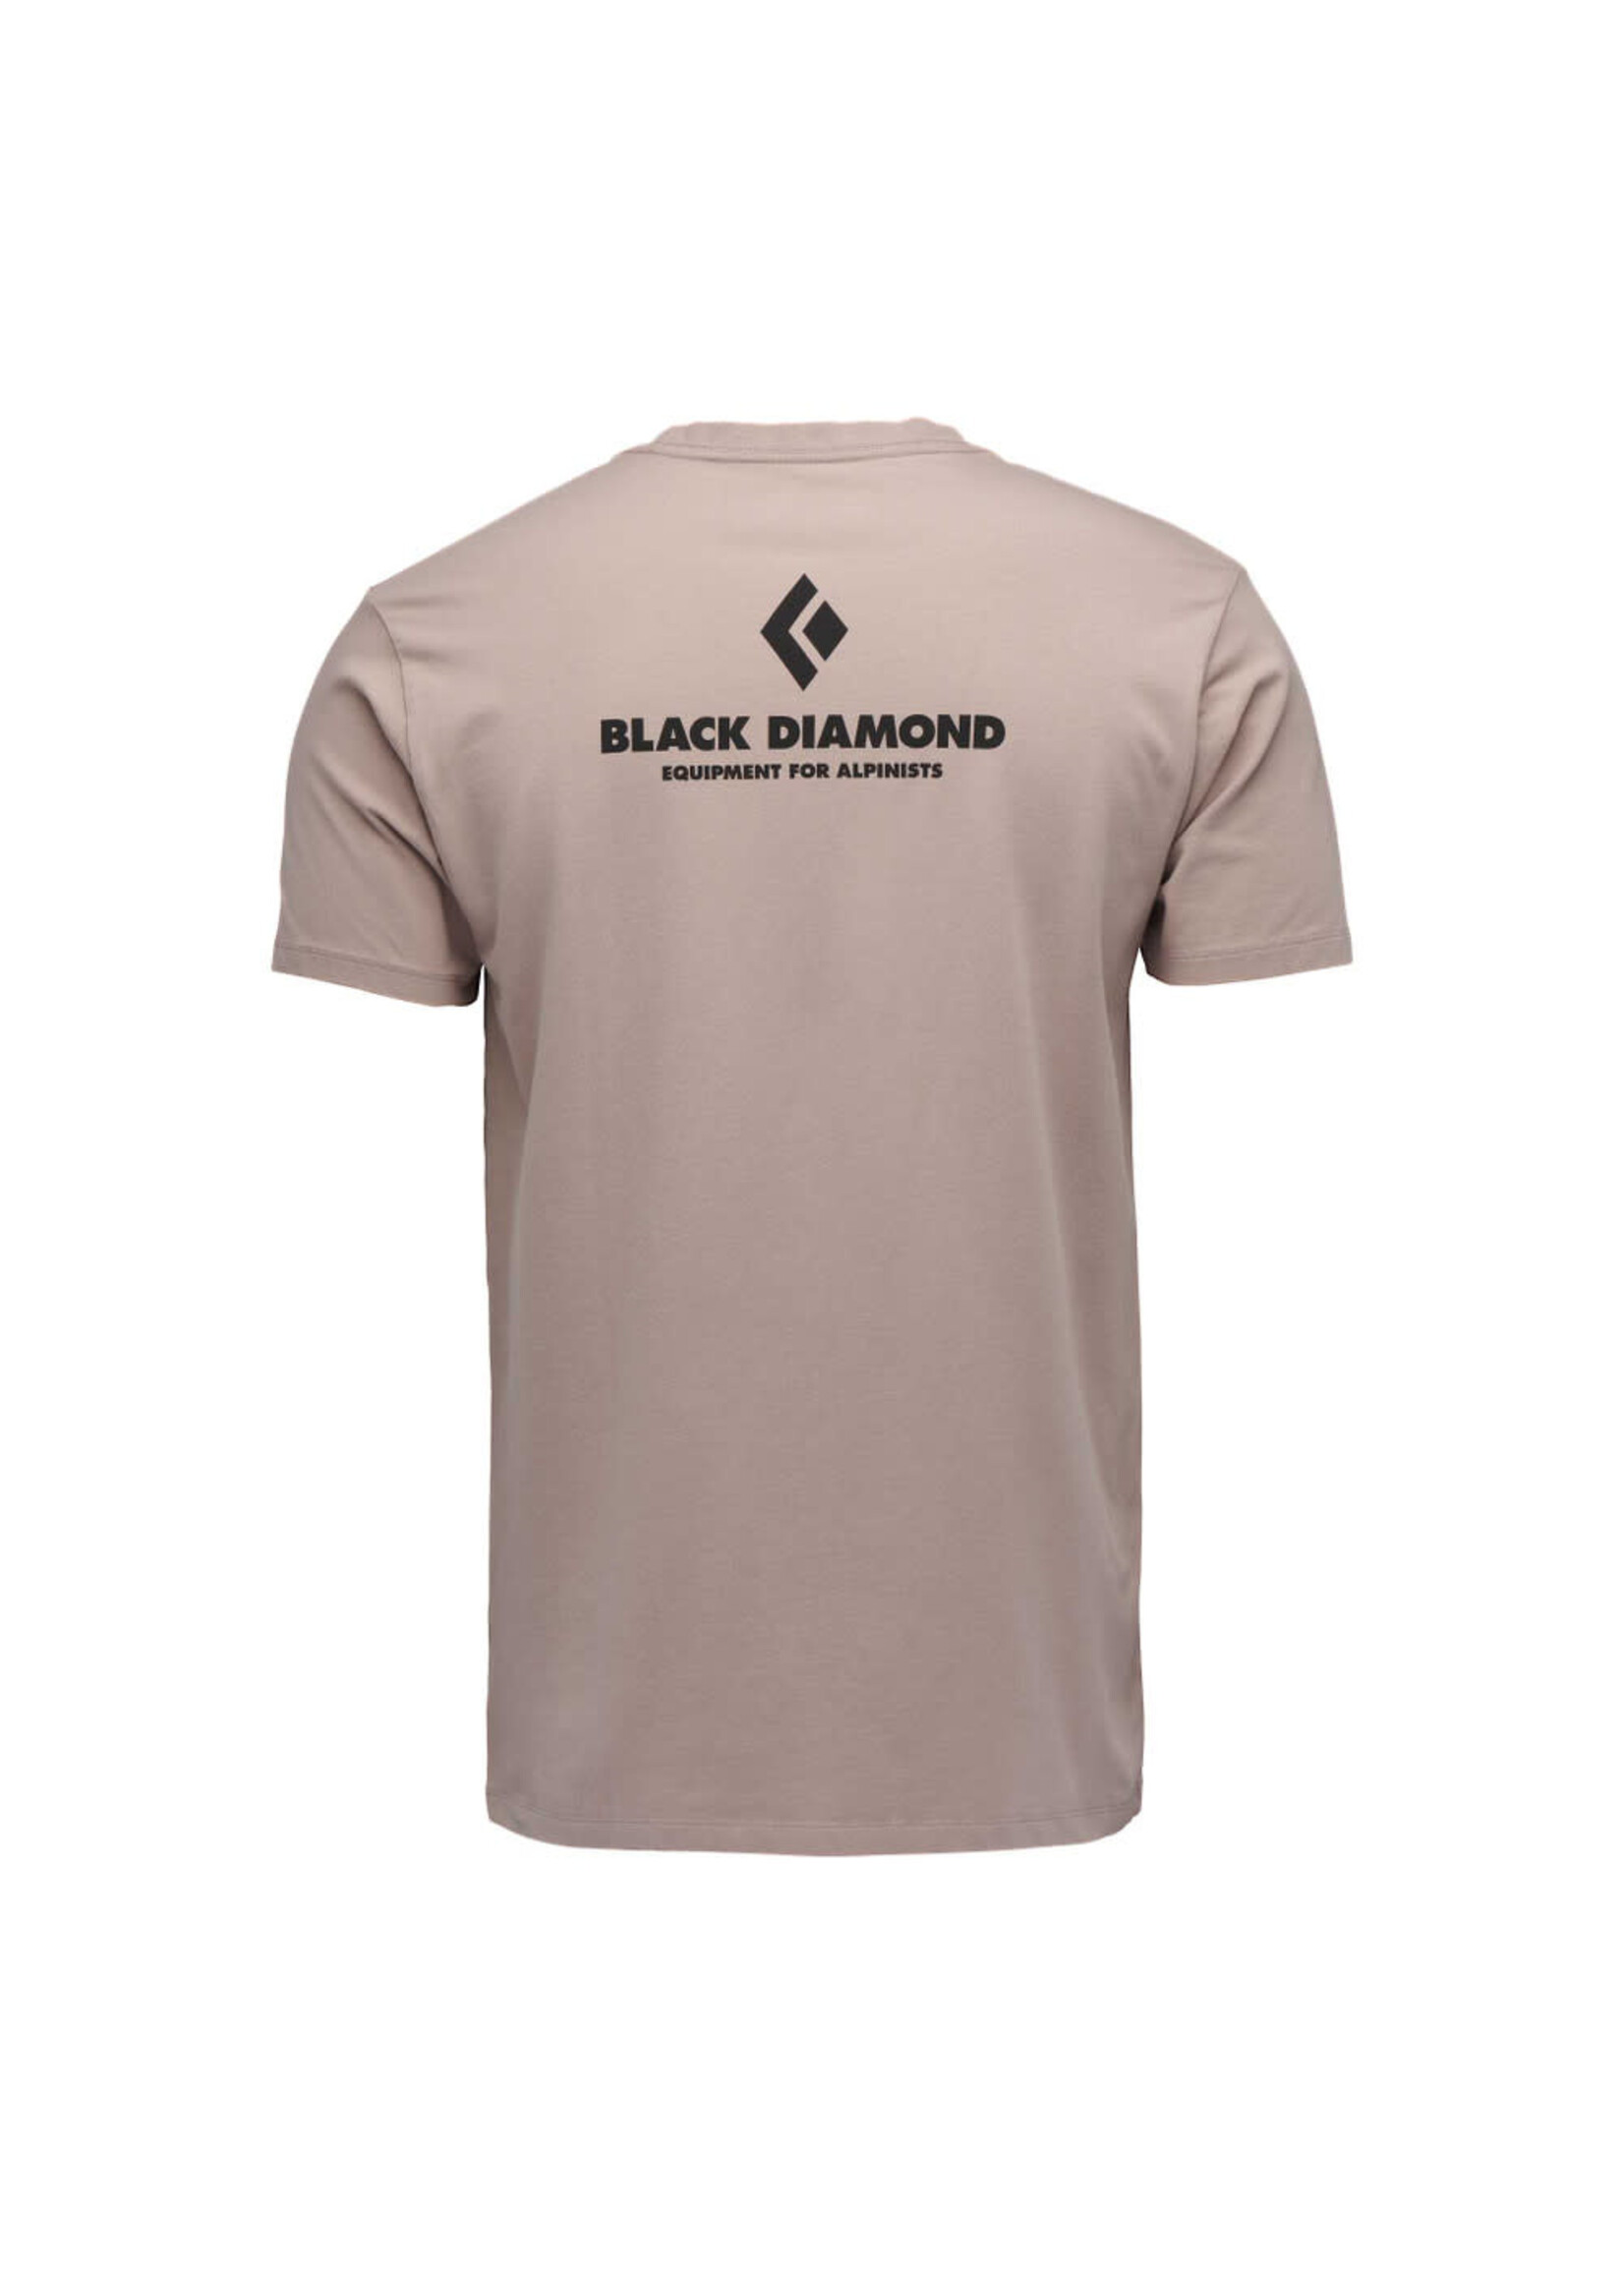 Black Diamond Black Diamond Equipment for Alpinist Tee